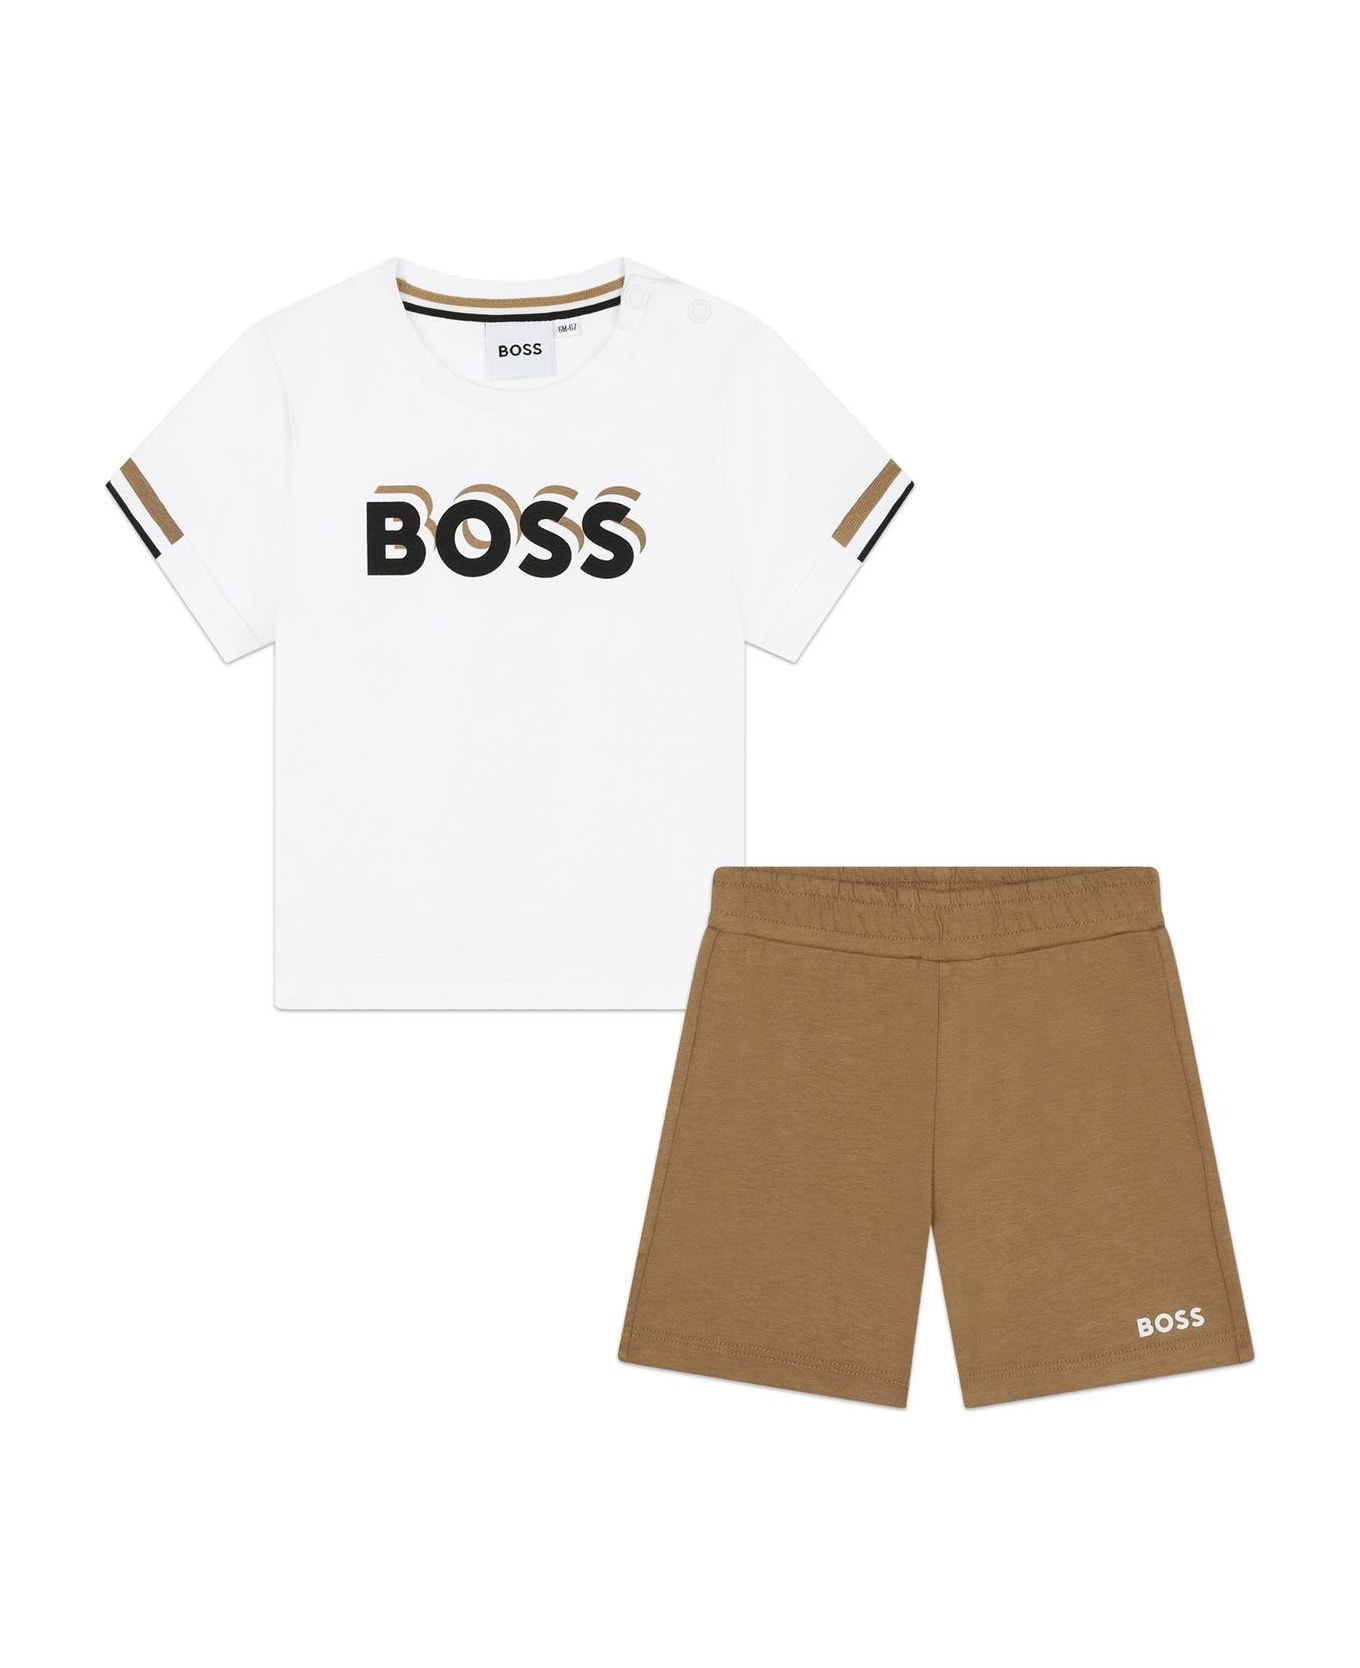 Hugo Boss Printed Top And Shorts Set - Beige